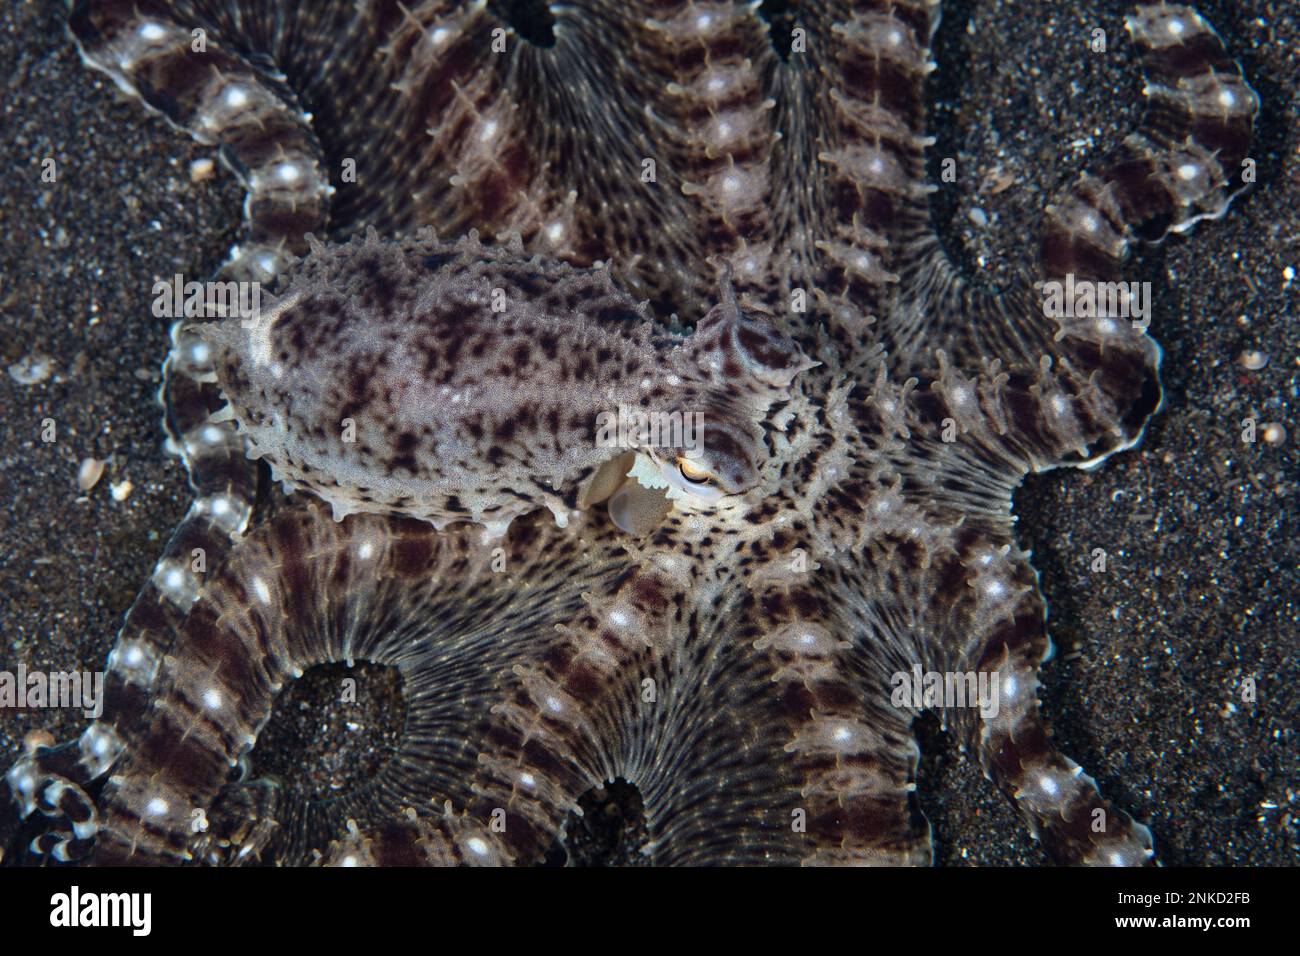 Ein imitierter Oktopus, Thaumoctopus mimicus, kriecht über den schwarzen Sandseefloor der Lembritstraße, Indonesien. Diese Art kann andere Meerestiere imitieren. Stockfoto